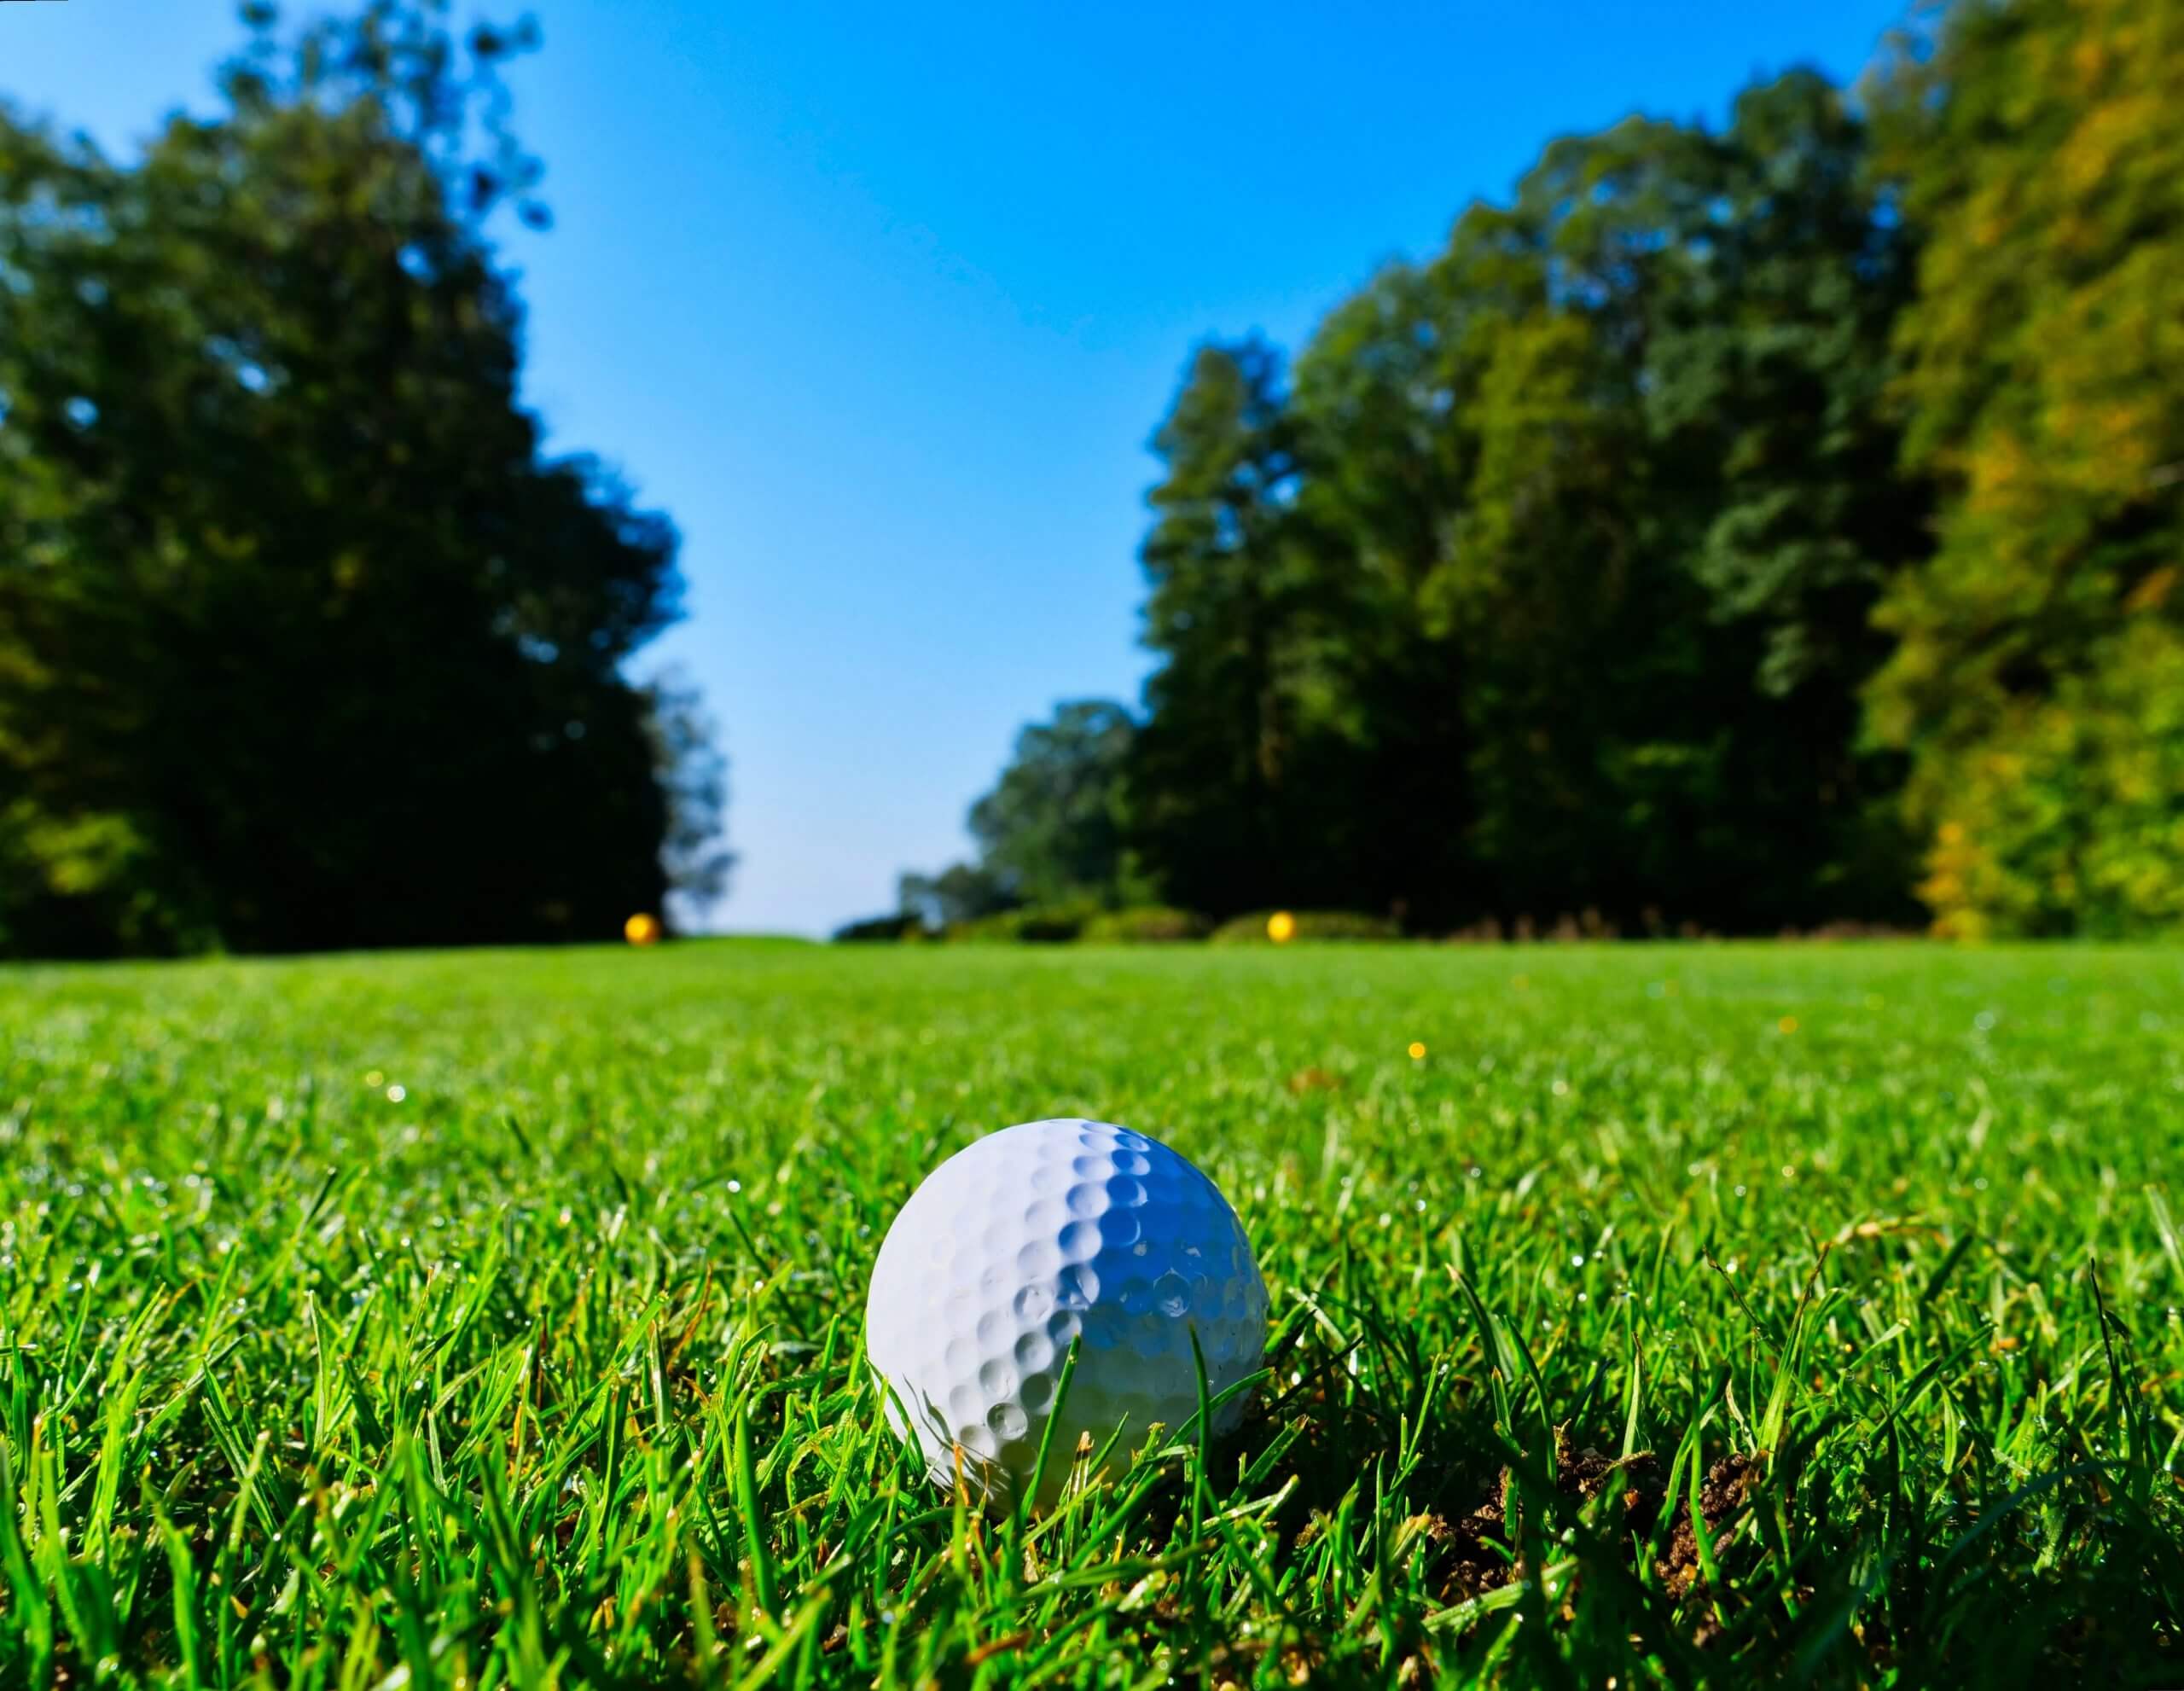 Golf ball on a golf course